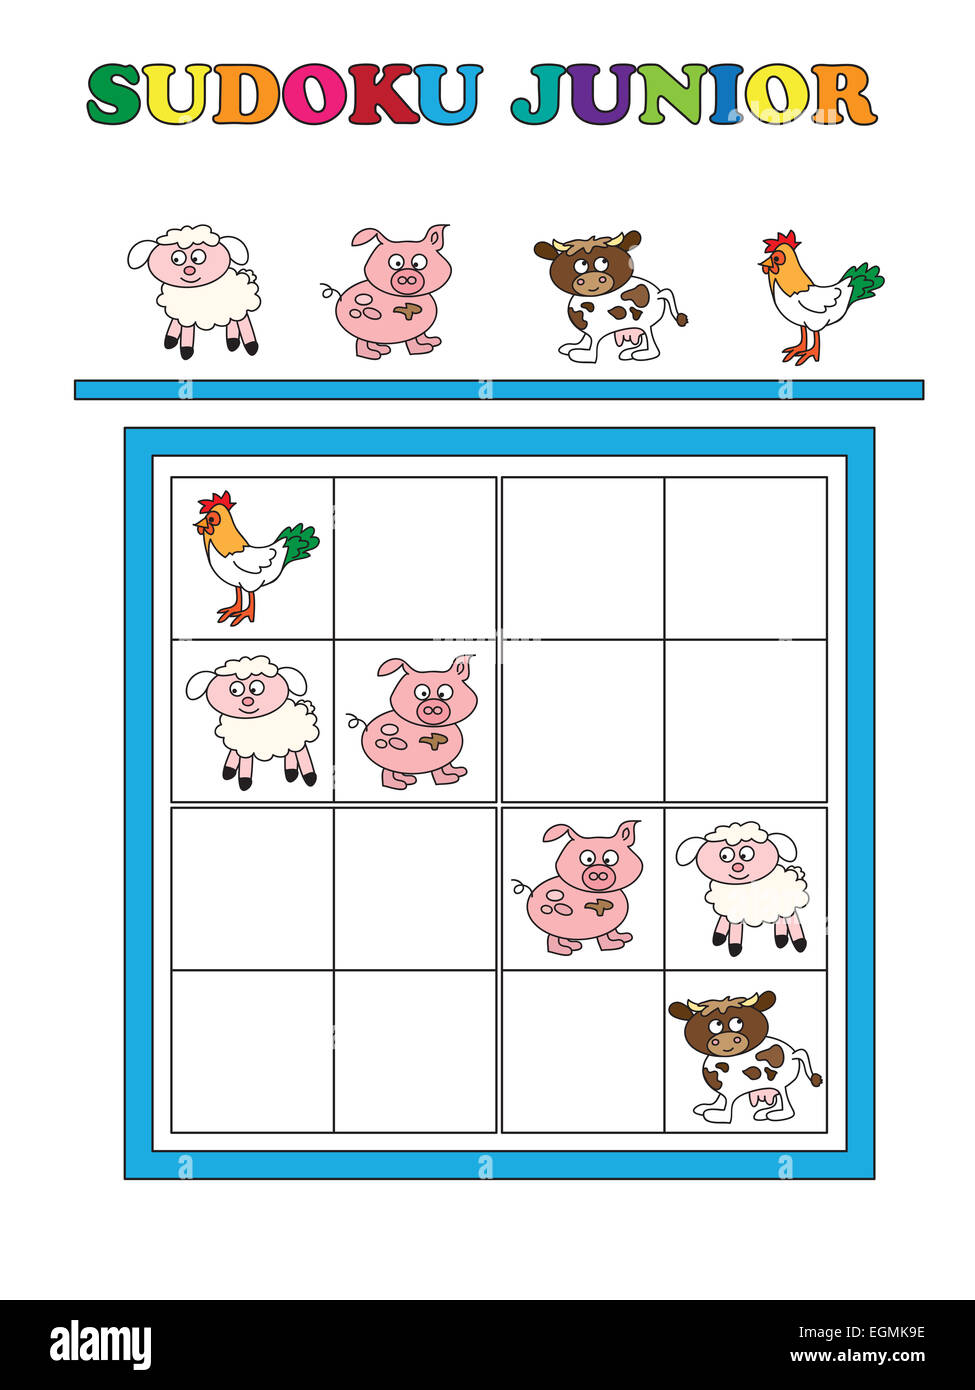 Game for children: sudoku junior. Stock Photo